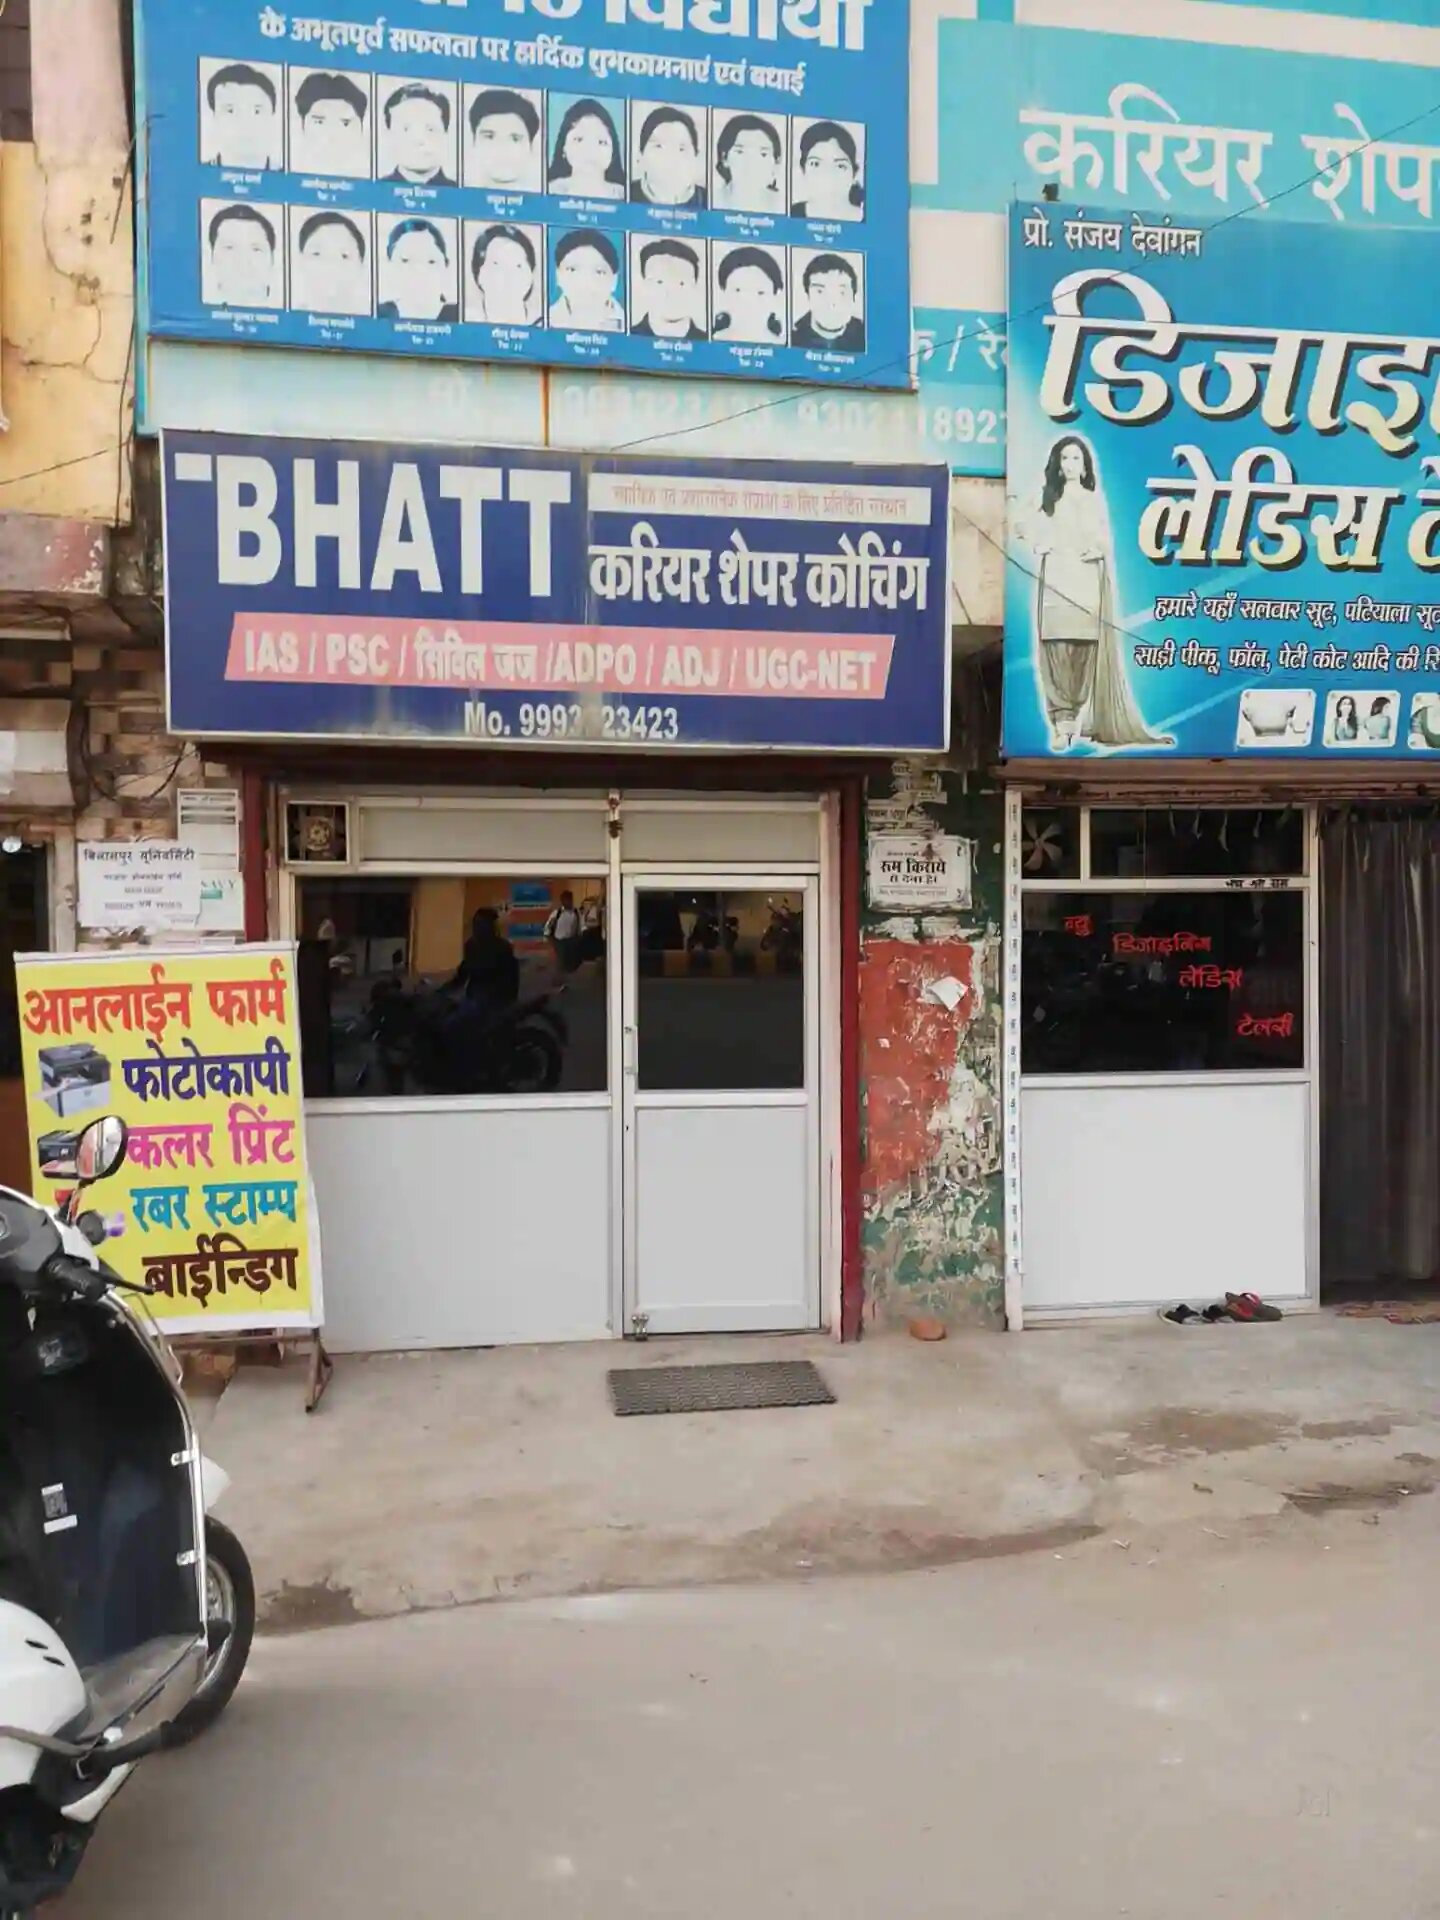 Bhatt Career Shaper Coaching Bilaspur - Search India